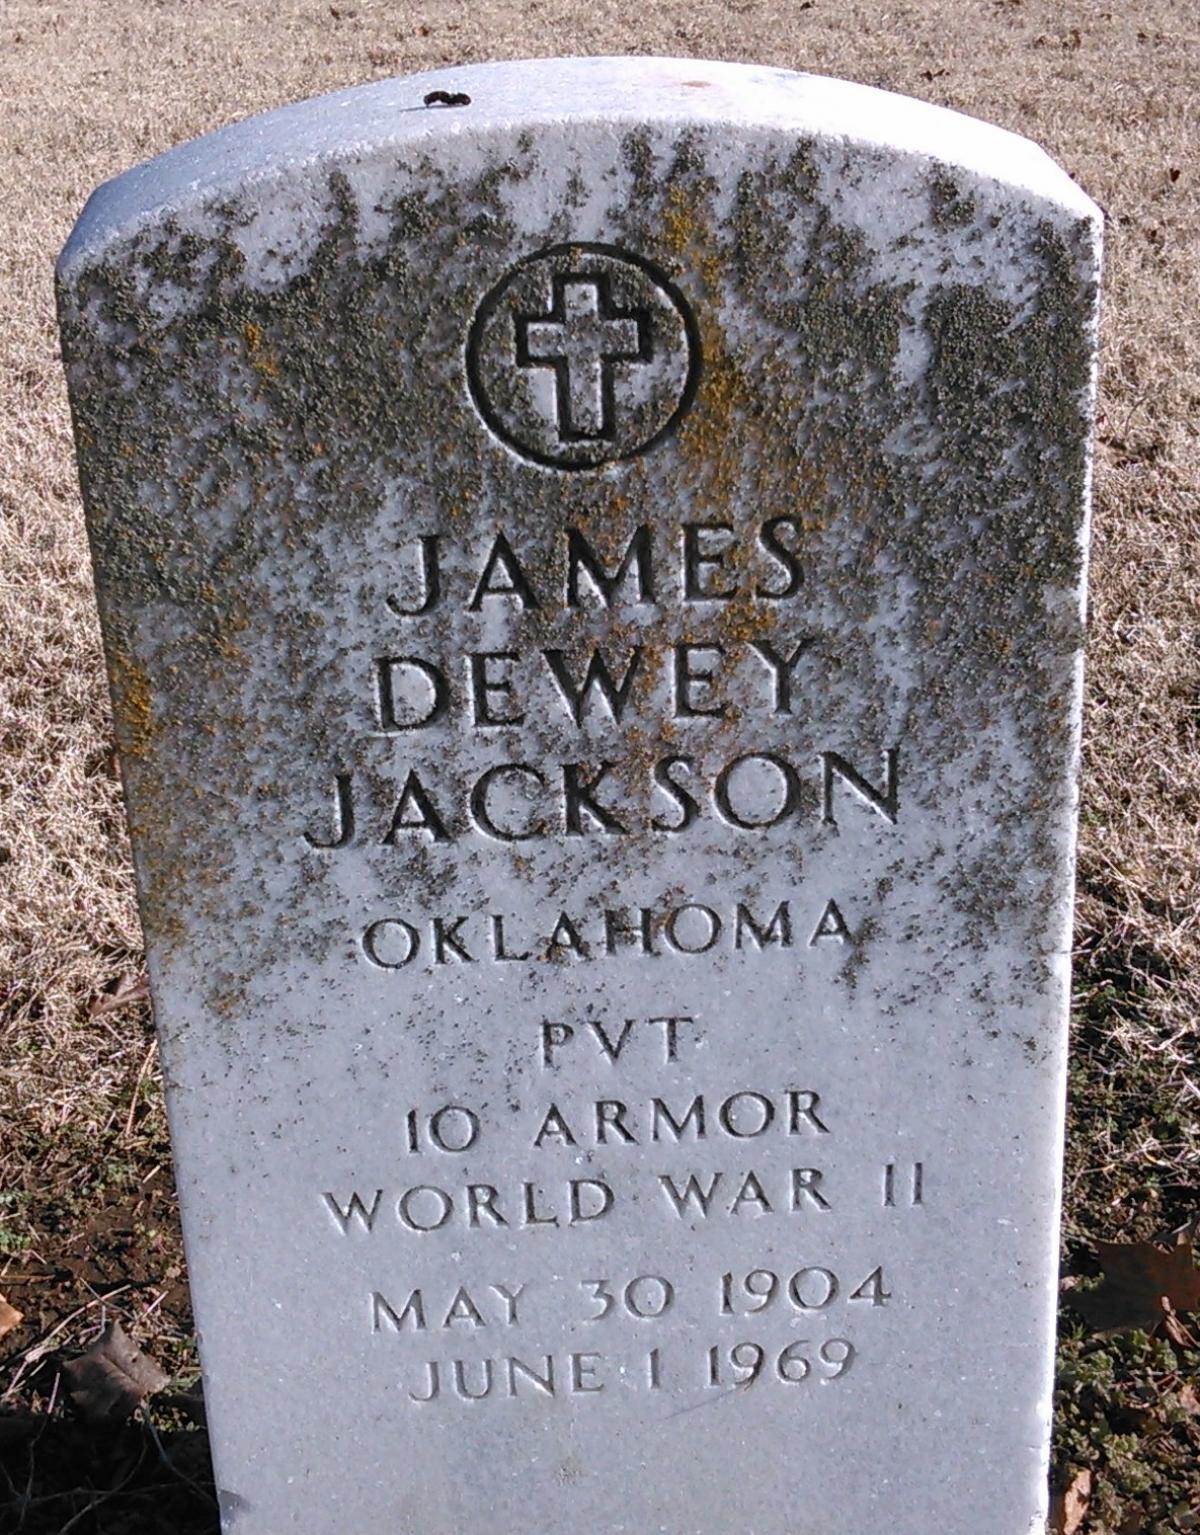 OK, Grove, Buzzard Cemetery, Jackson, James Dewey Headstone